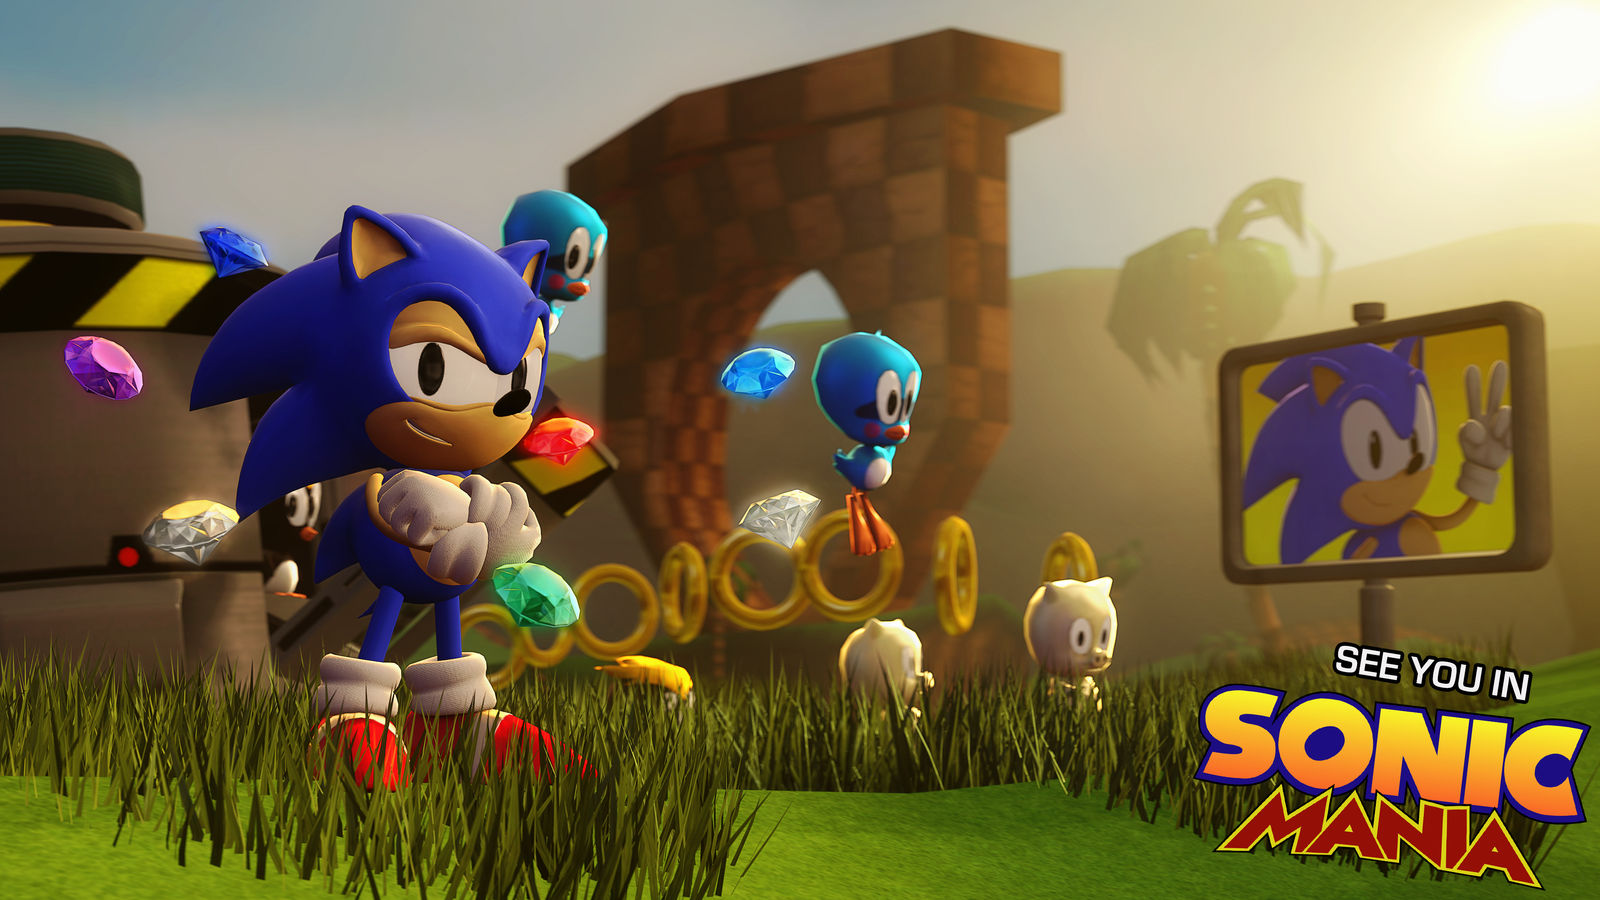 Steam Workshop::Green Hill Zone - Sonic the Hedgehog